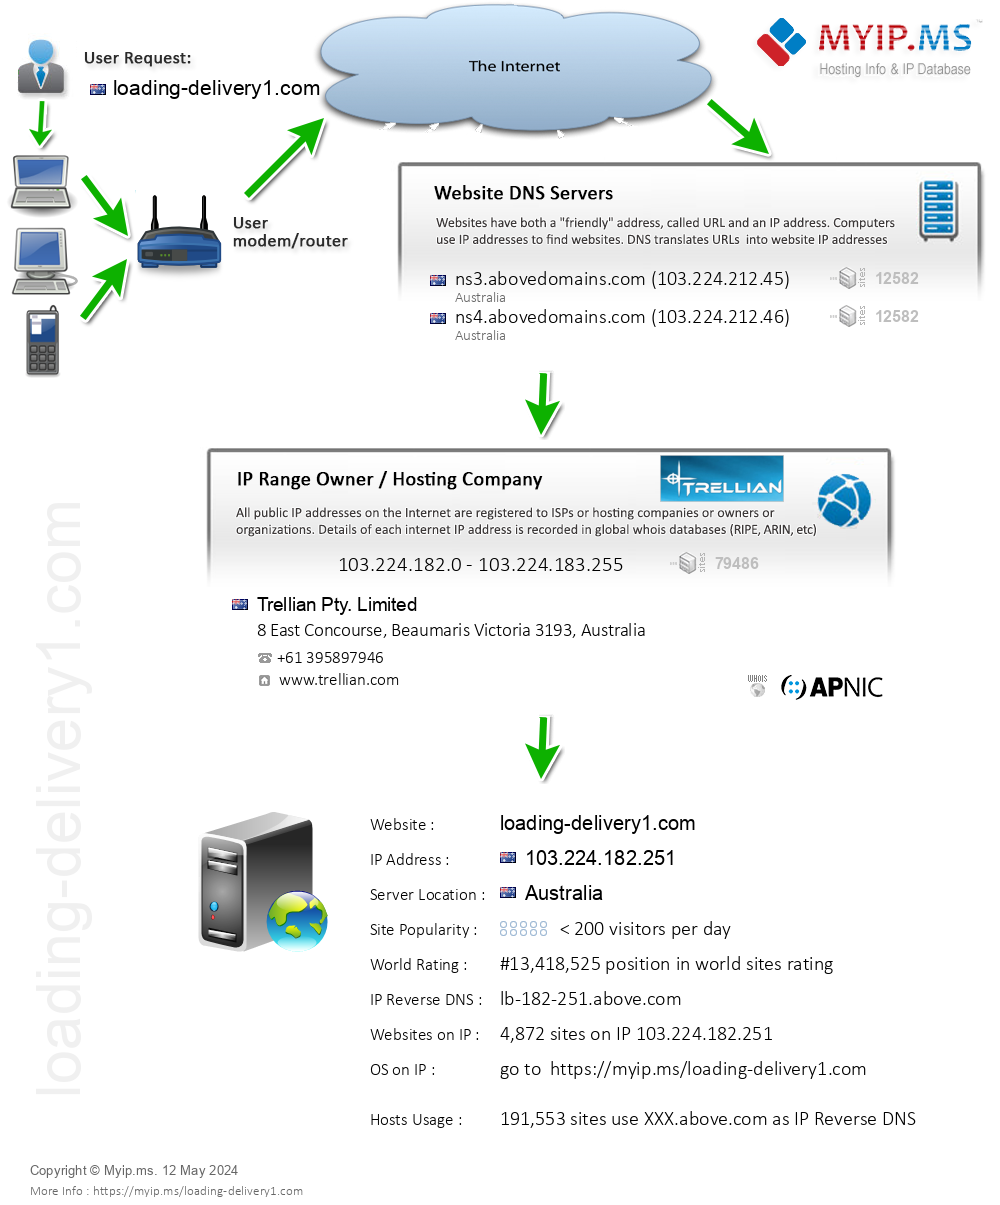 Loading-delivery1.com - Website Hosting Visual IP Diagram